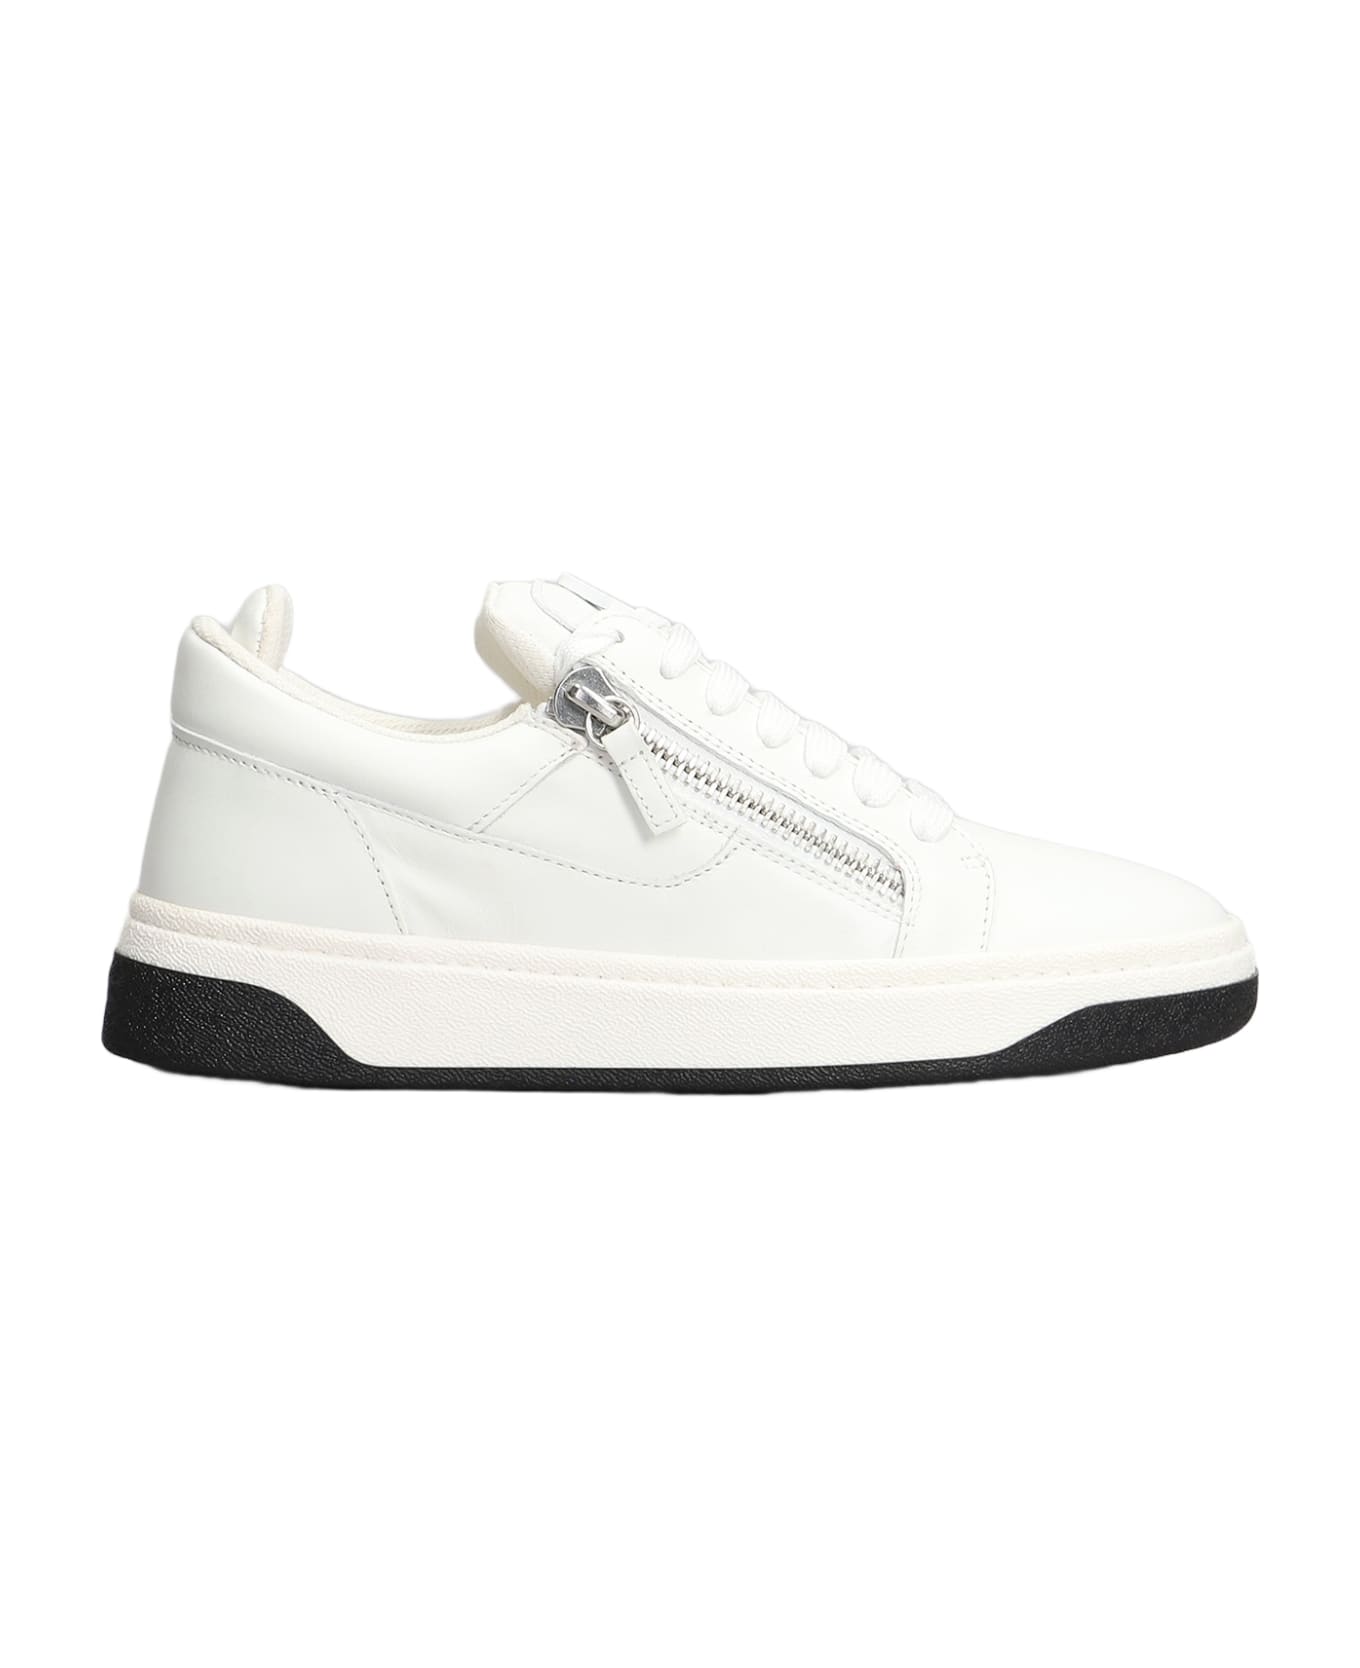 Giuseppe Zanotti Gz94 Sneakers In White Leather - white スニーカー